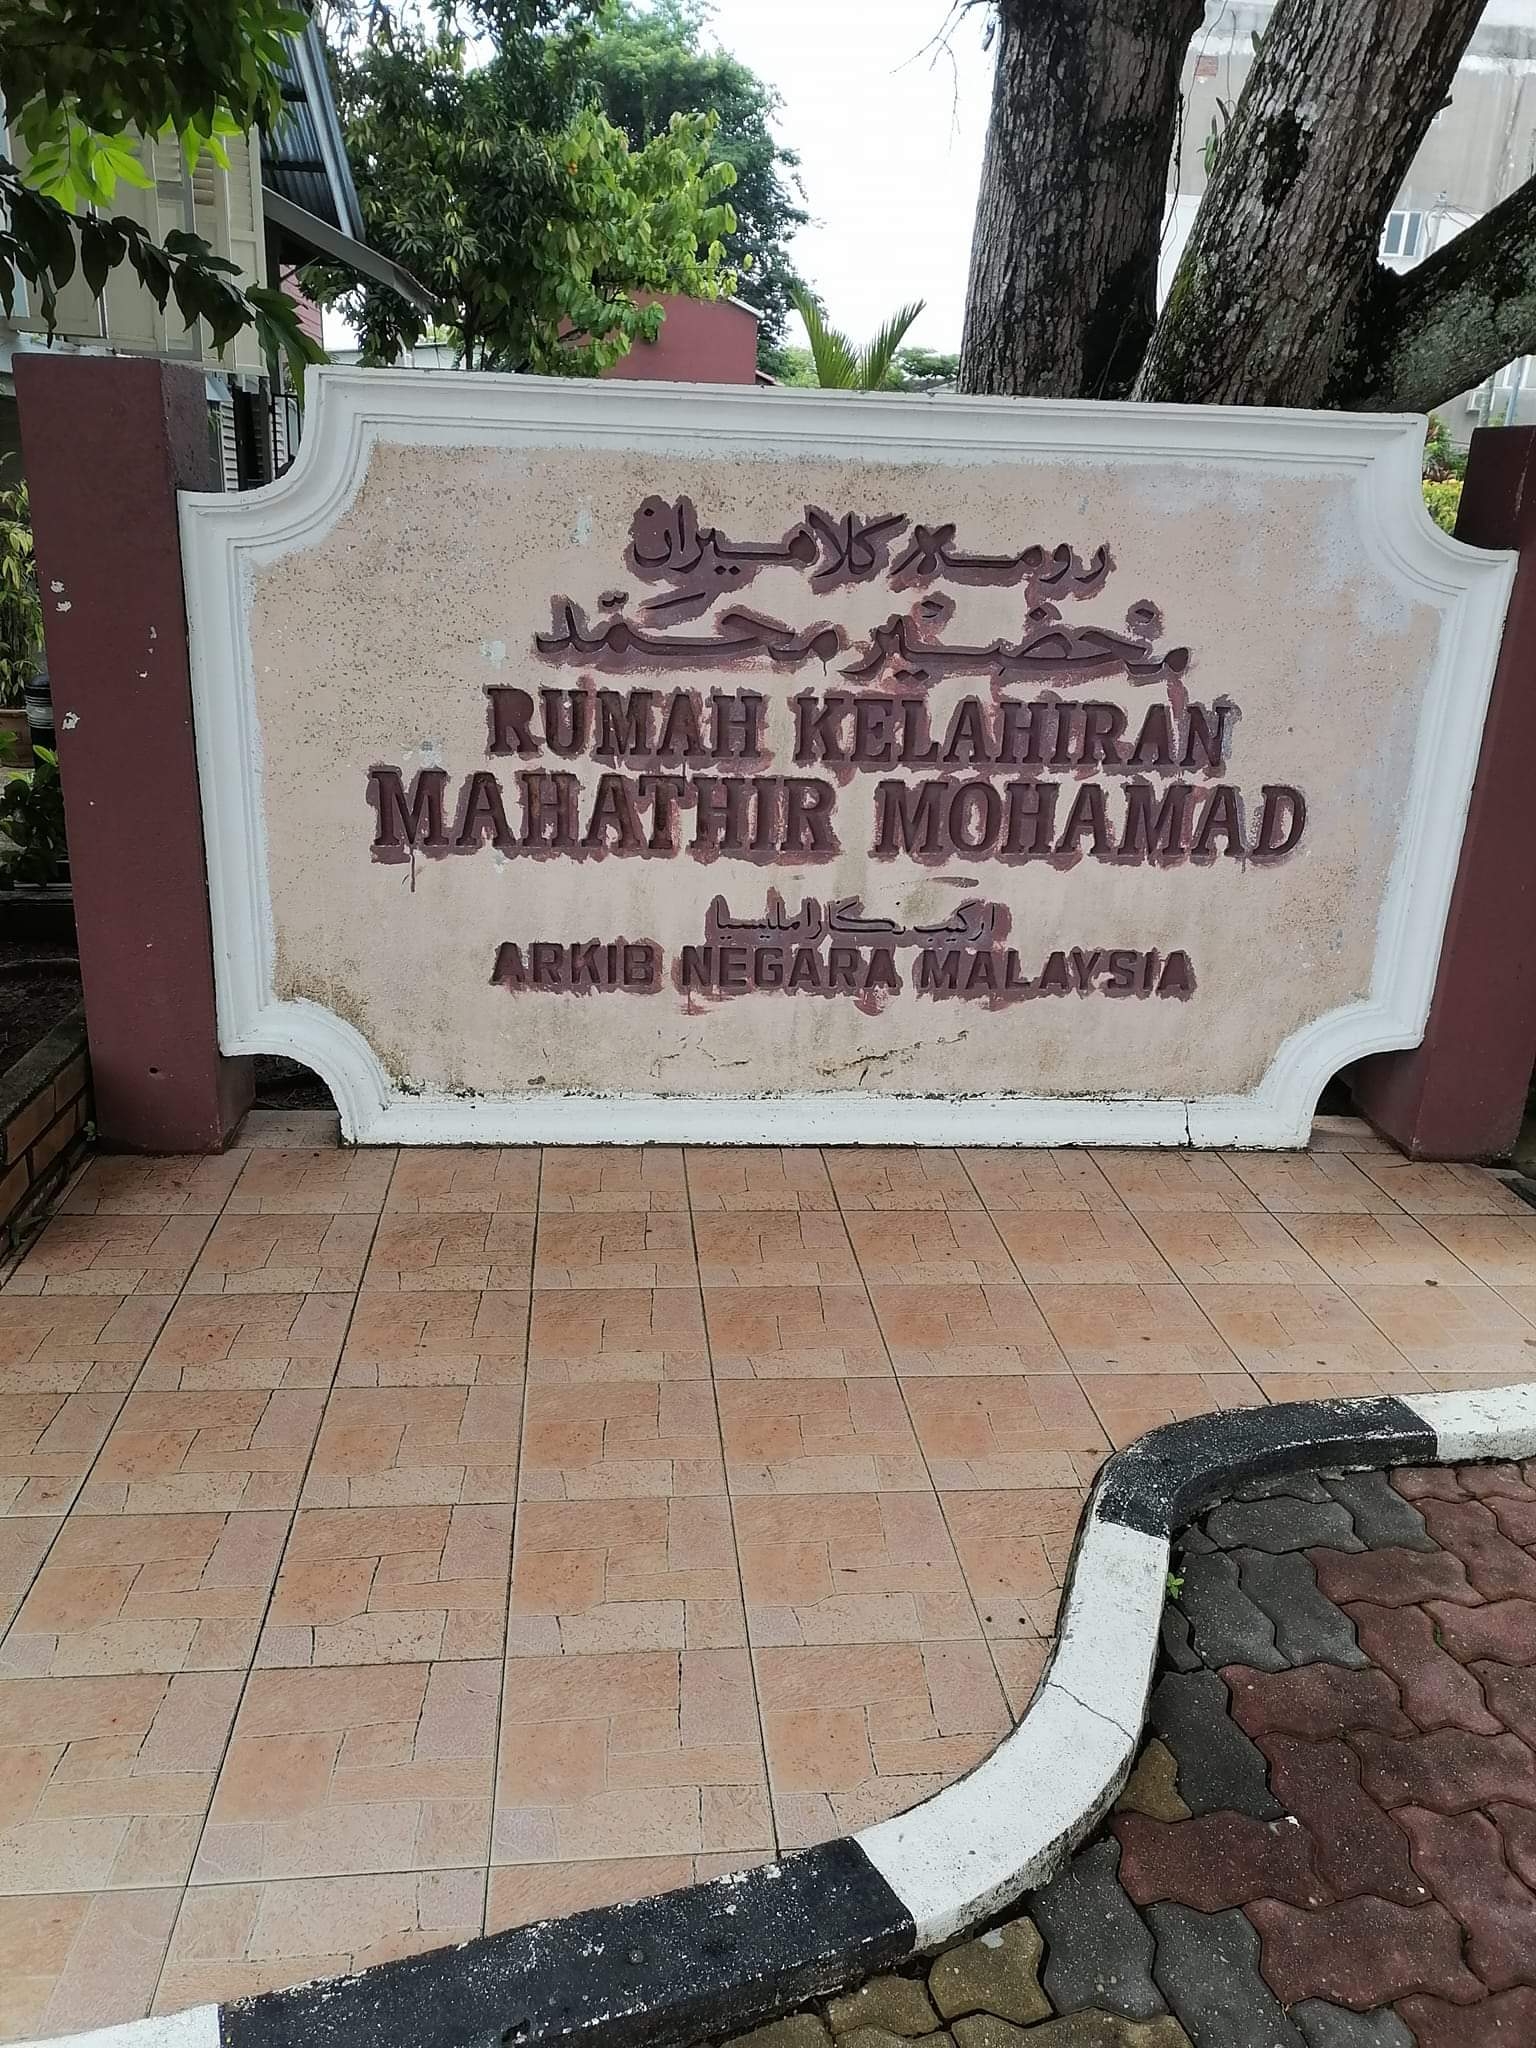 微🐾：Rumah Kelahiran Mahathir